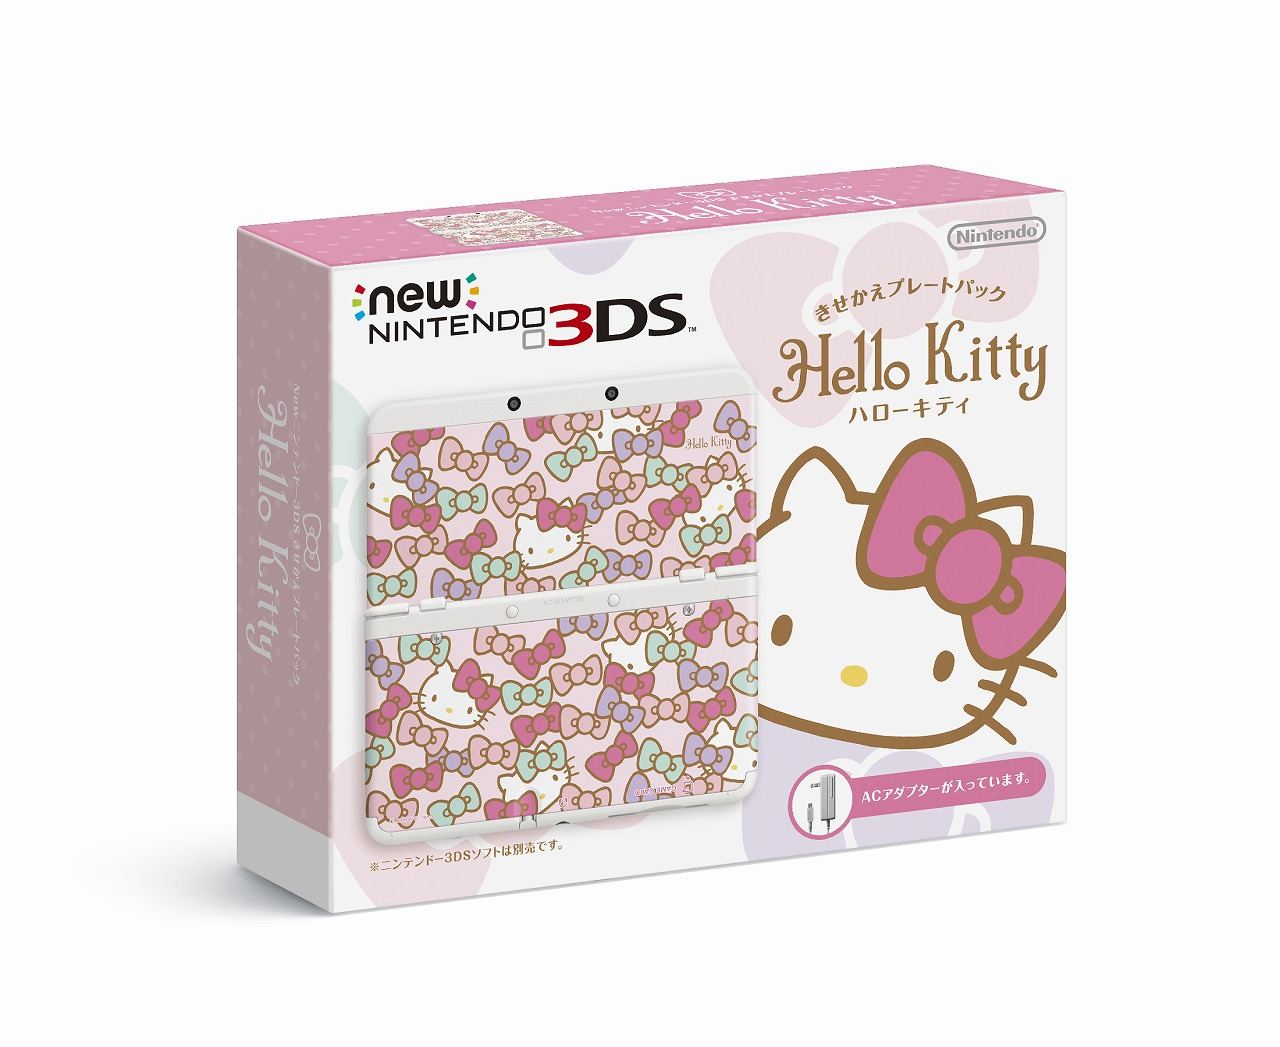 Hello nintendo. Nintendo 3ds hello Kitty. Nintendo 3ds XL hello Kitty Case. Nintendo DSI hello Kitty. Nintendo DSI Case hello Kitty.